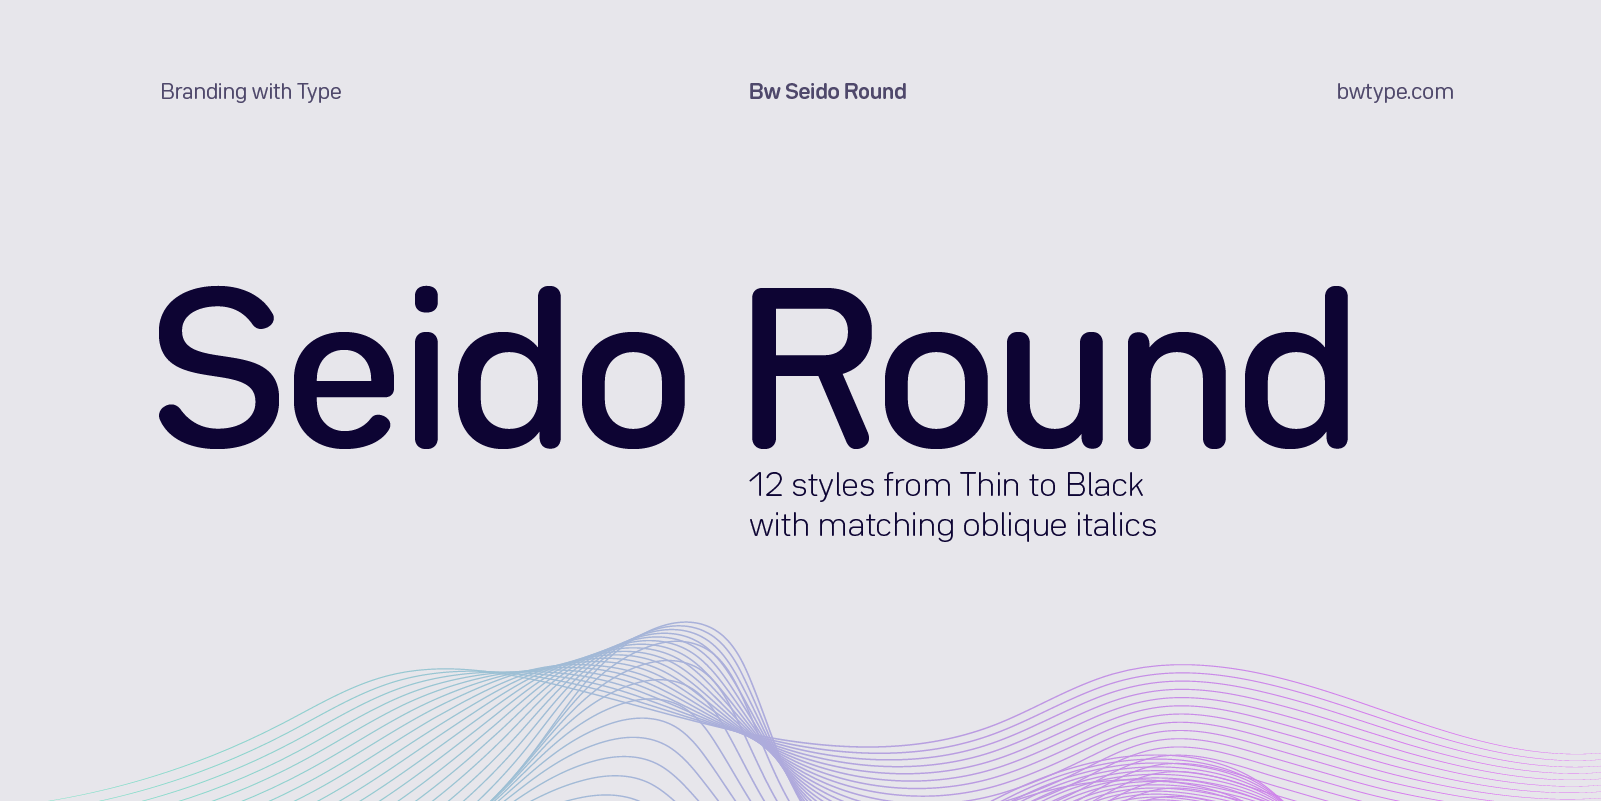 New Bw Seido Round font family